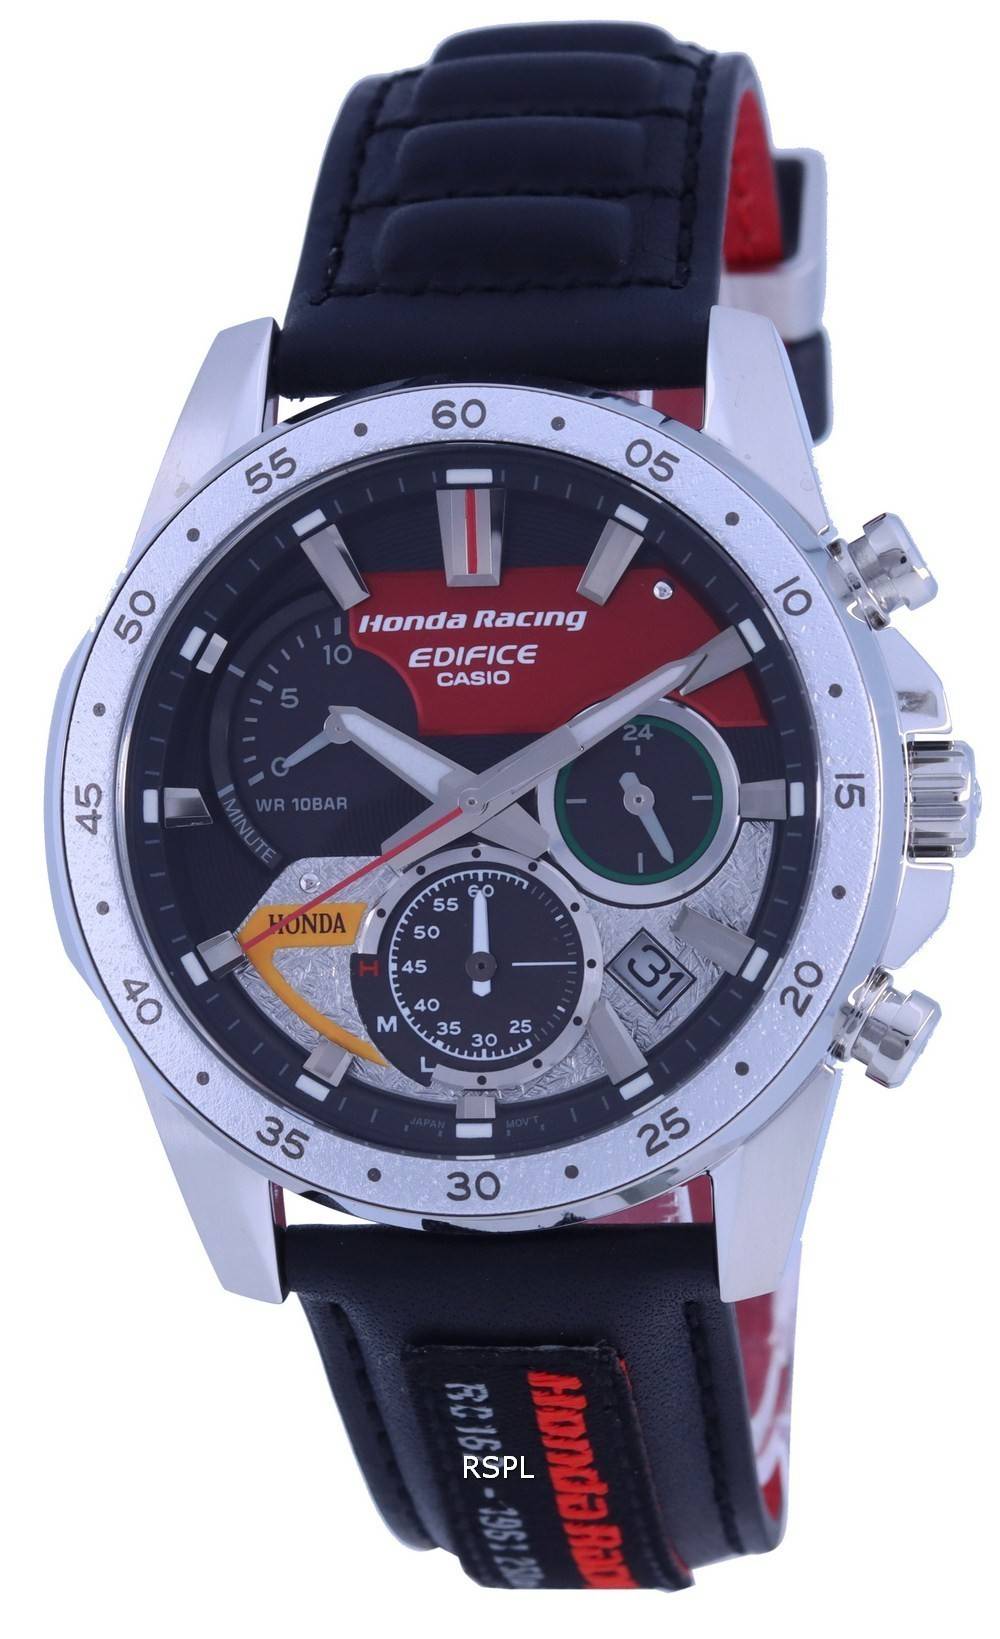 Honda 1988 World Championship Chronograph watch